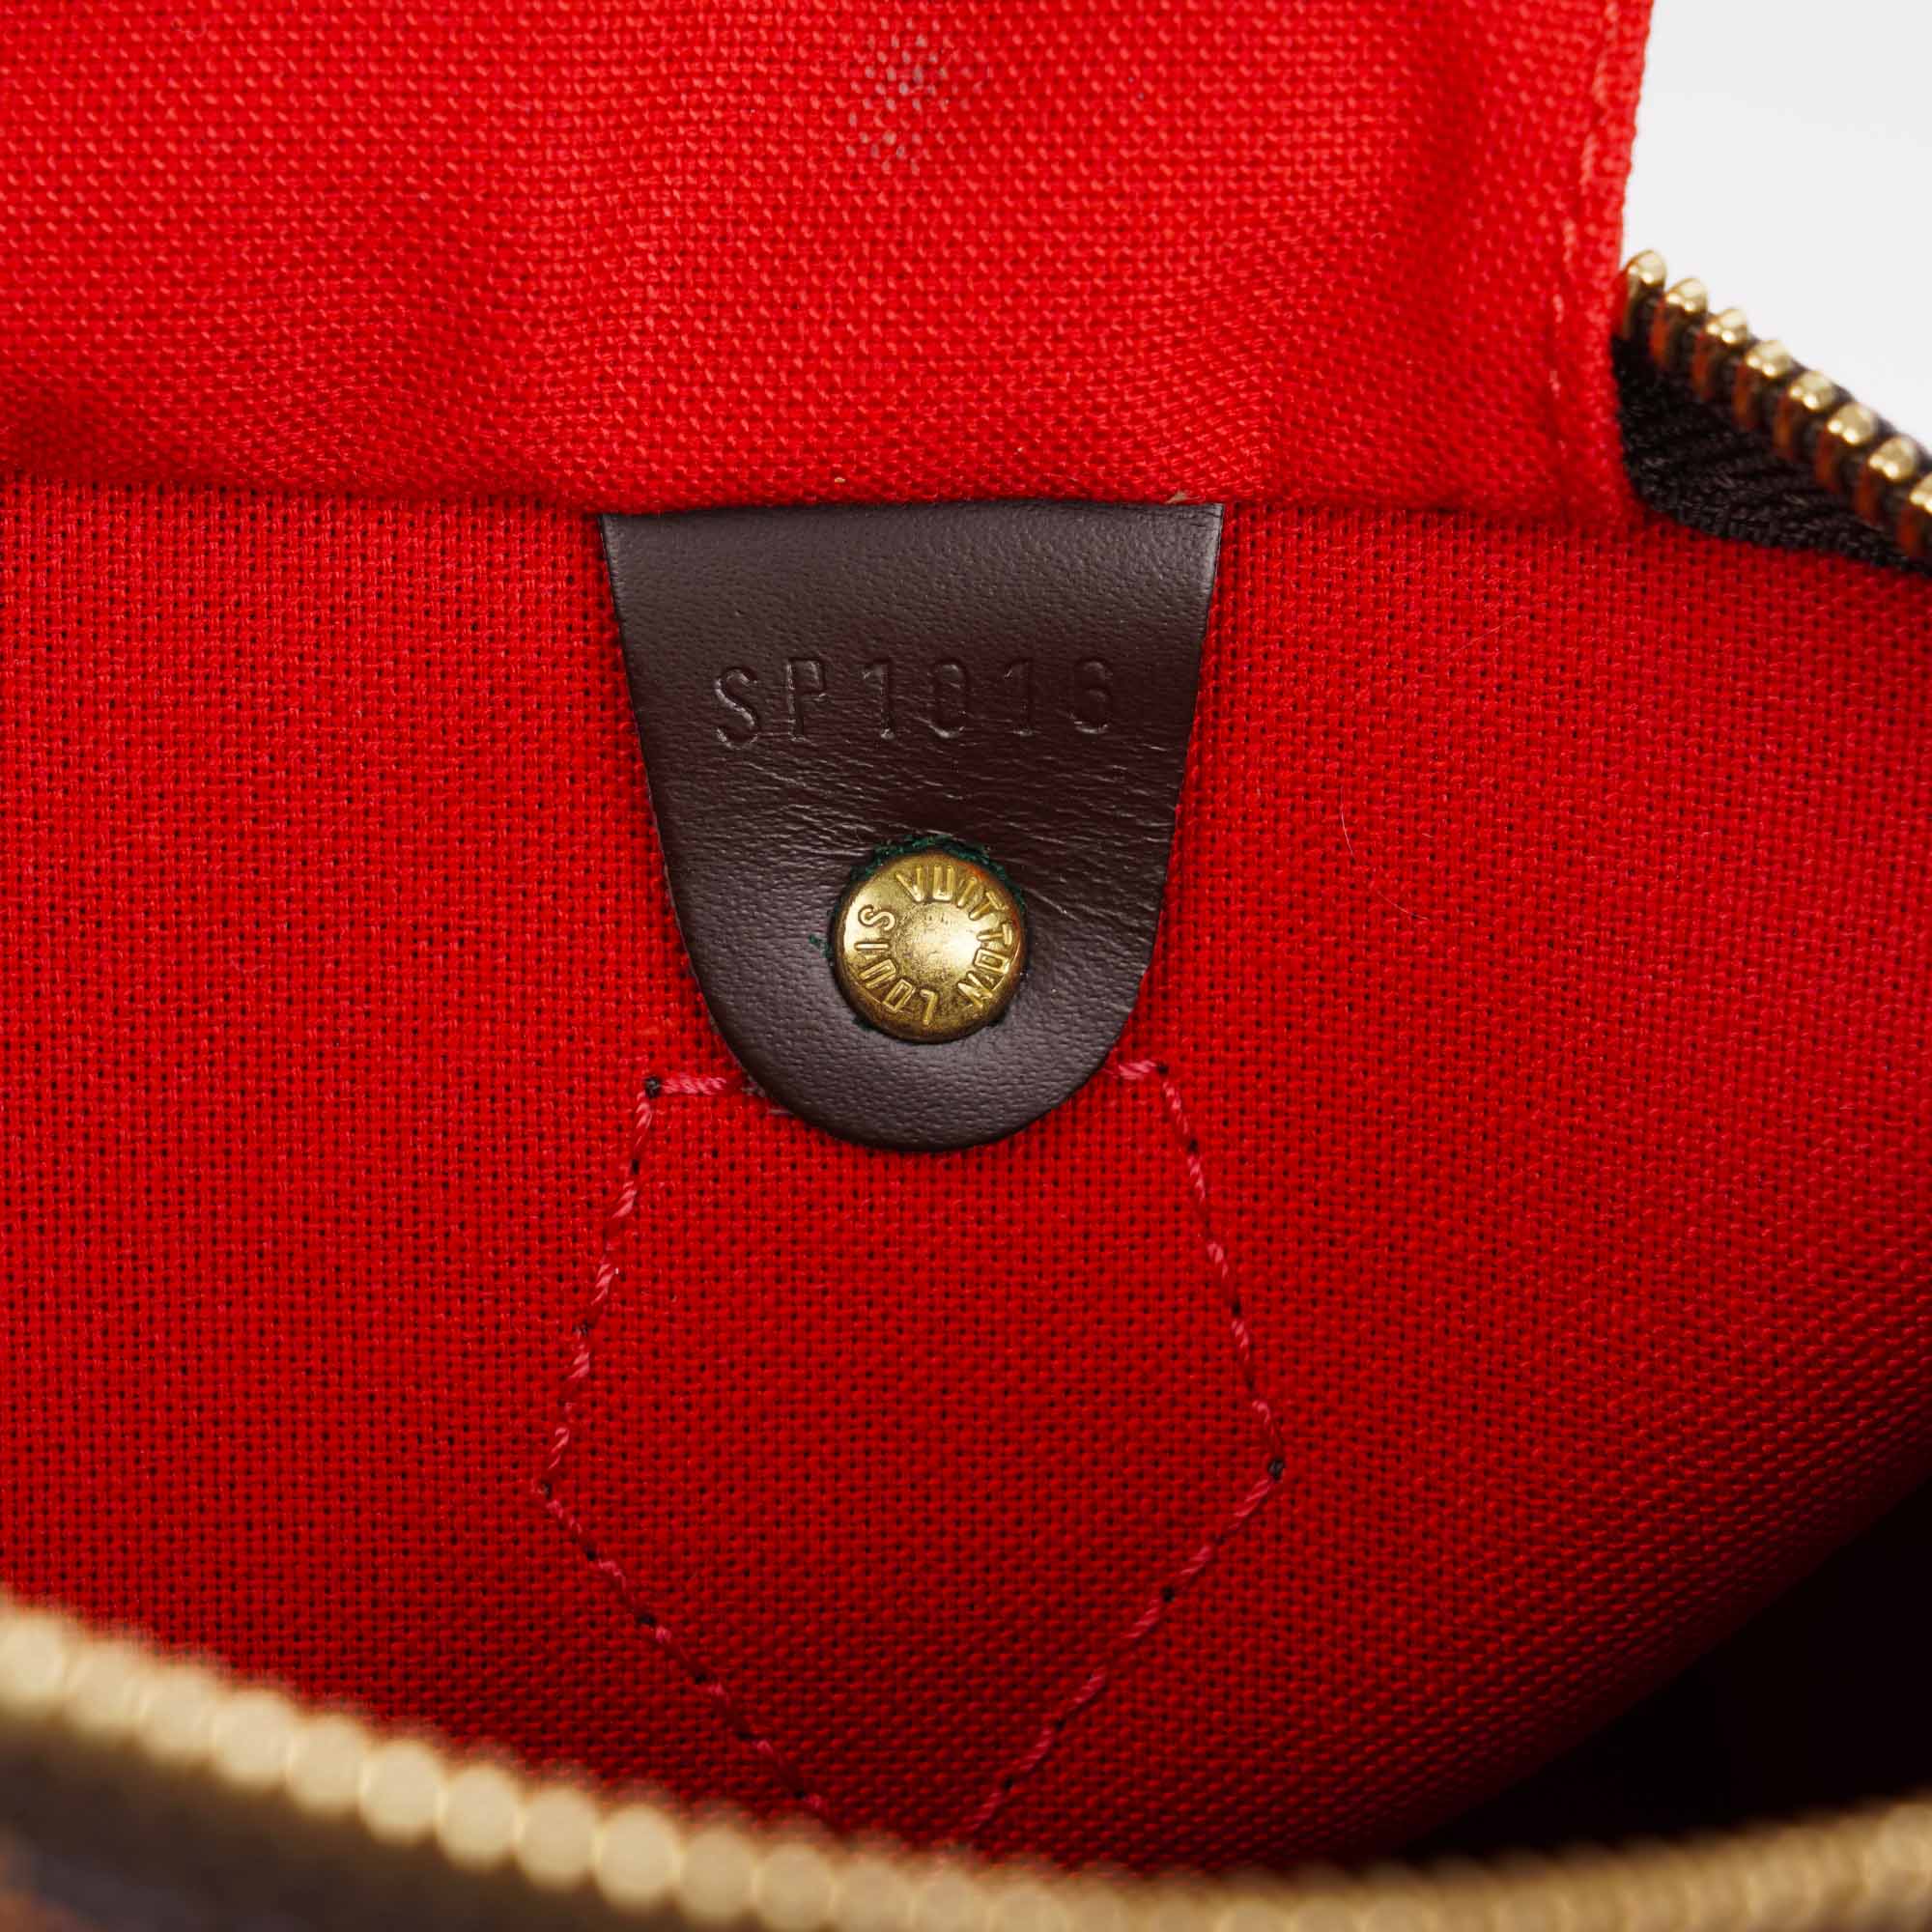 Speedy 30 Handbag - LOUIS VUITTON - Affordable Luxury image